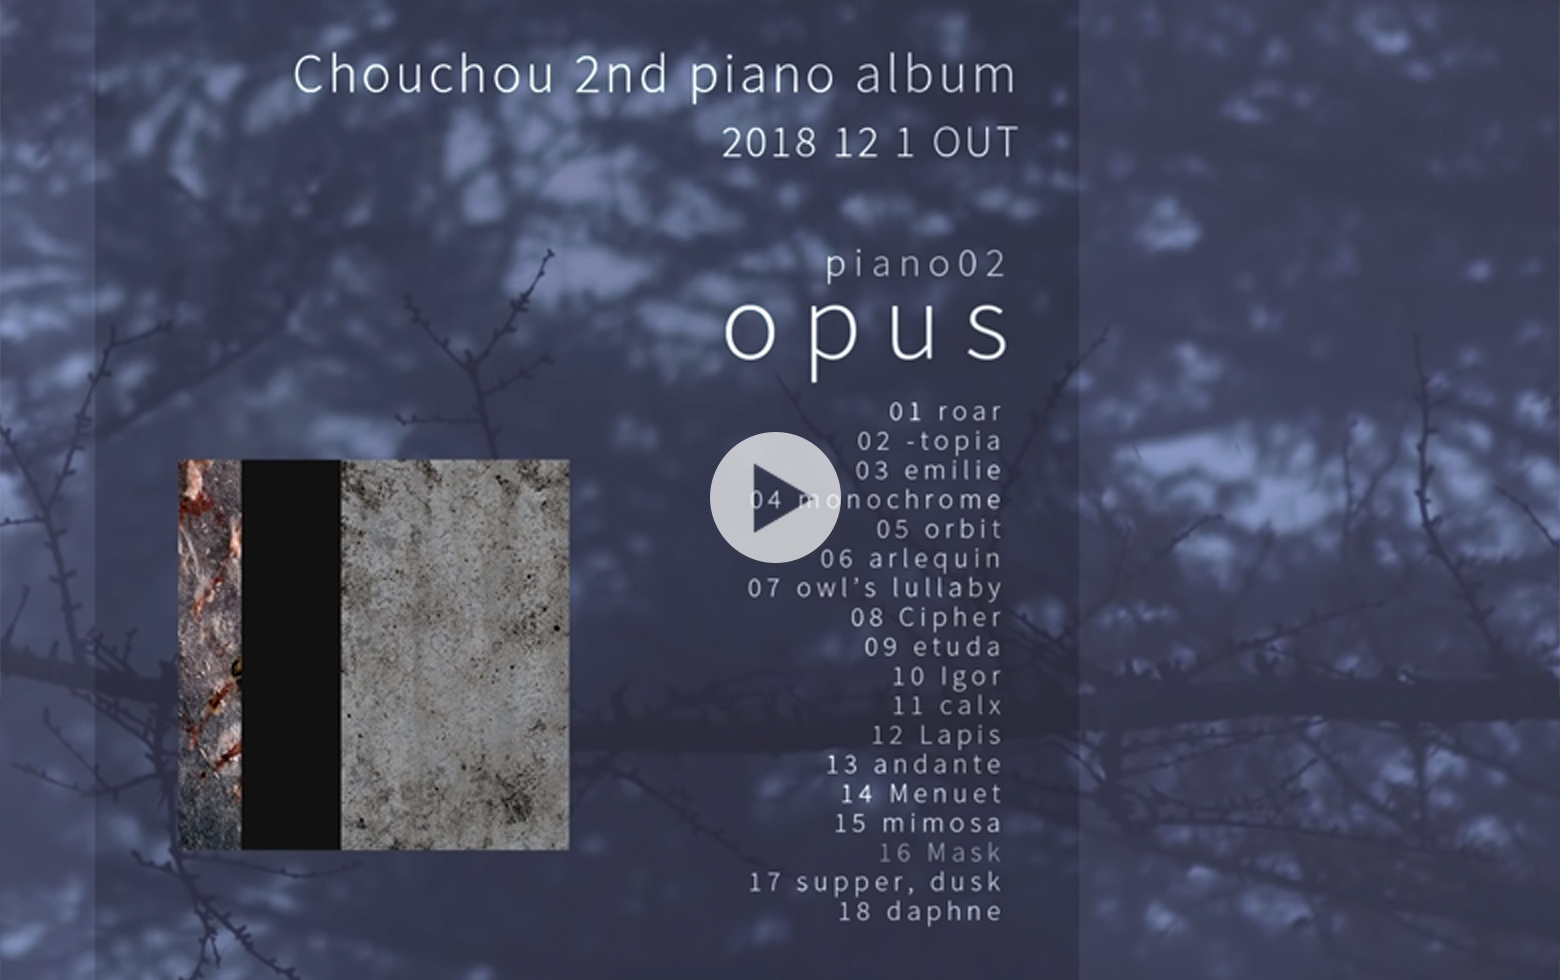 Chouchou - Piano Album "opus" Trailer